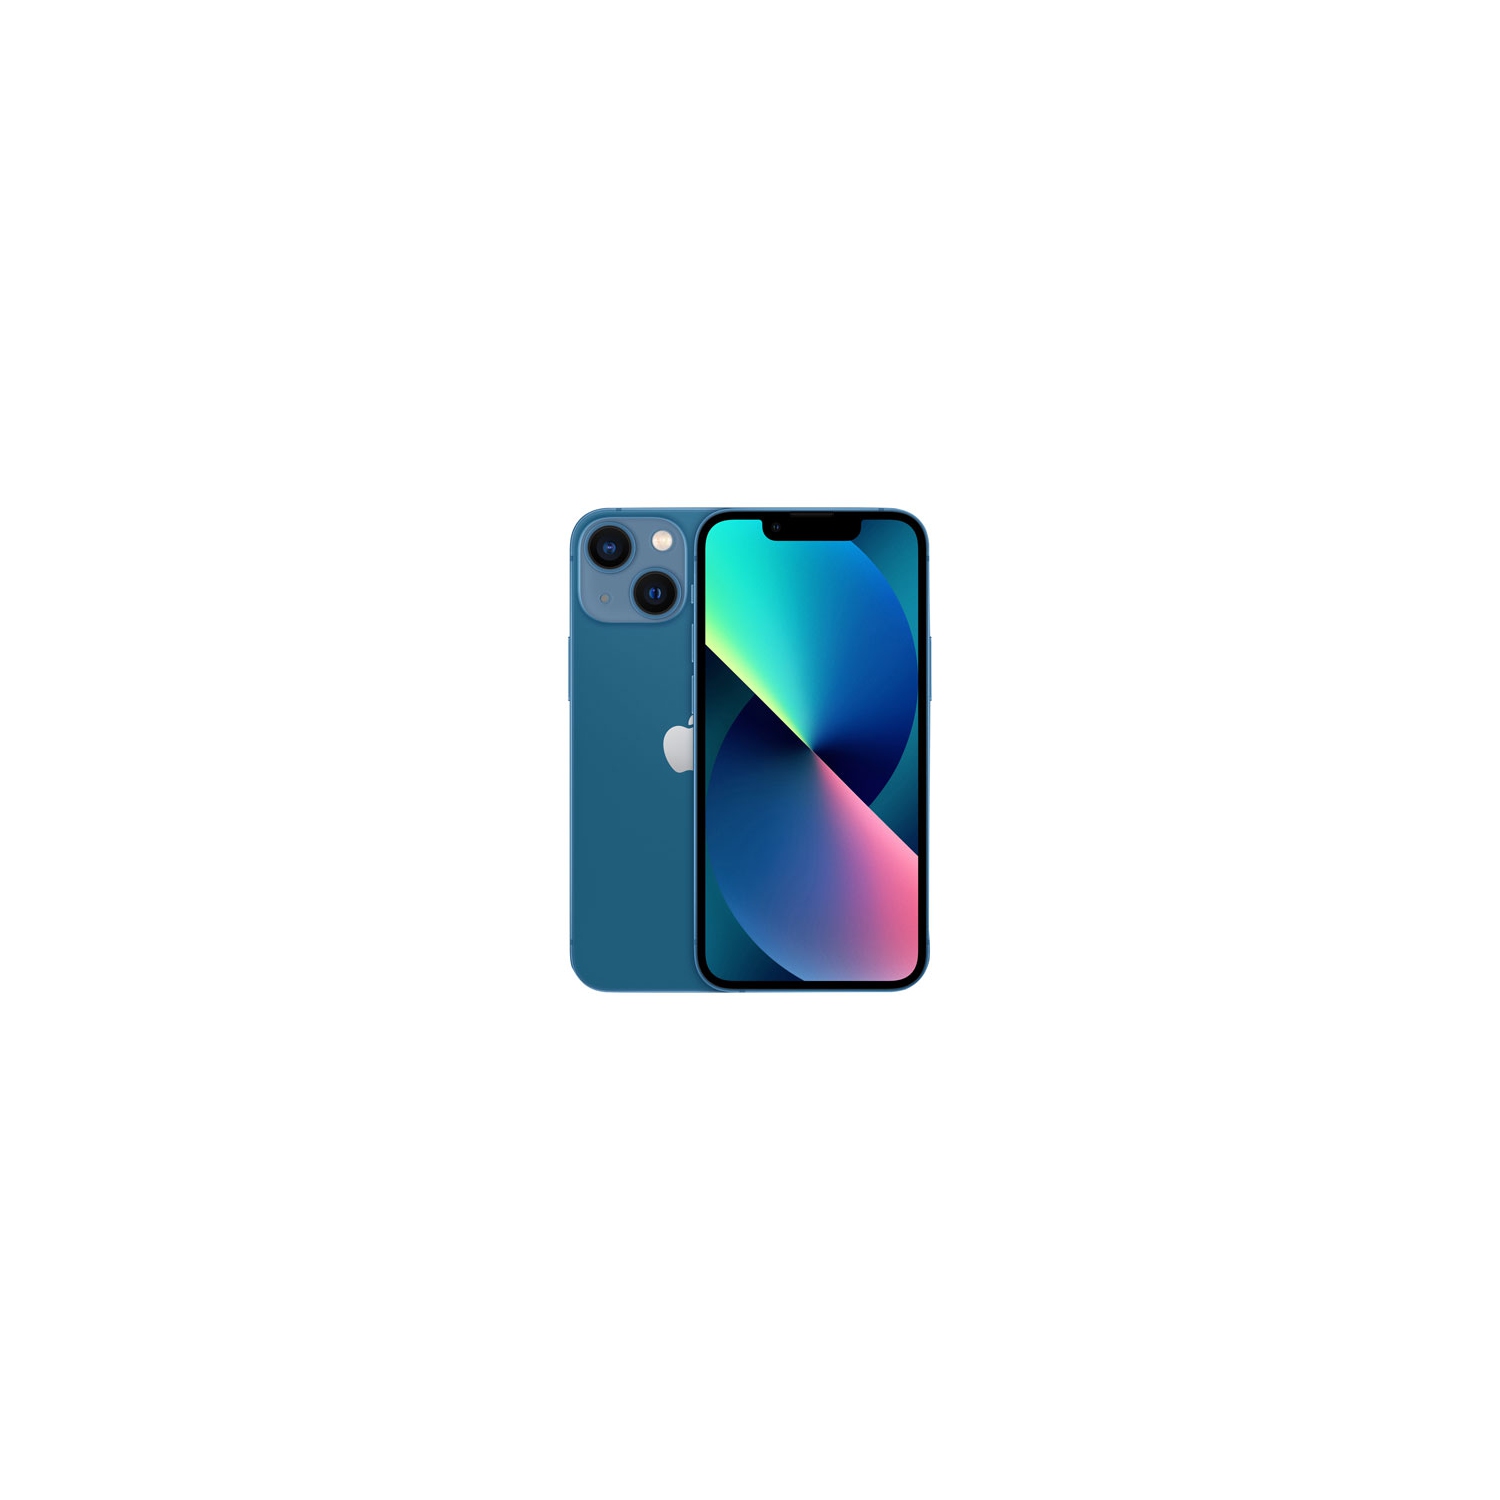 Apple iPhone 13 mini 512GB - Blue - Unlocked - New